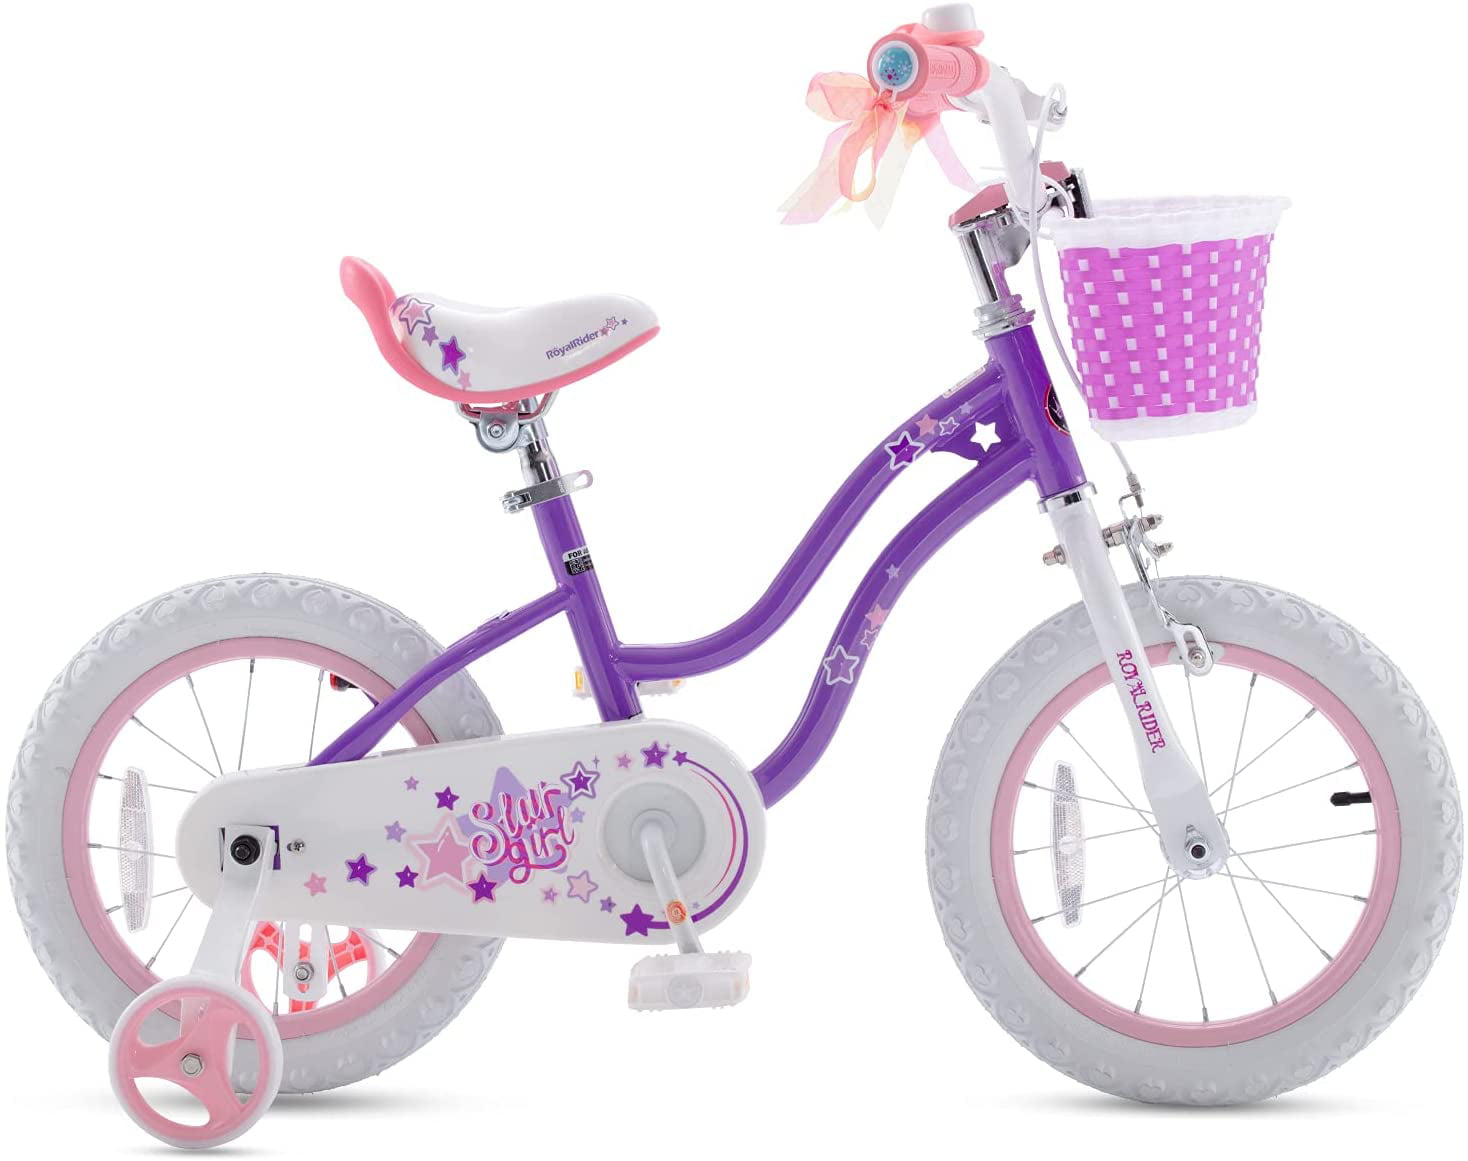 RoyalBaby Girls Kids Bike Stargirl 12 14 Inch Bicycle with Basket Training Wheel